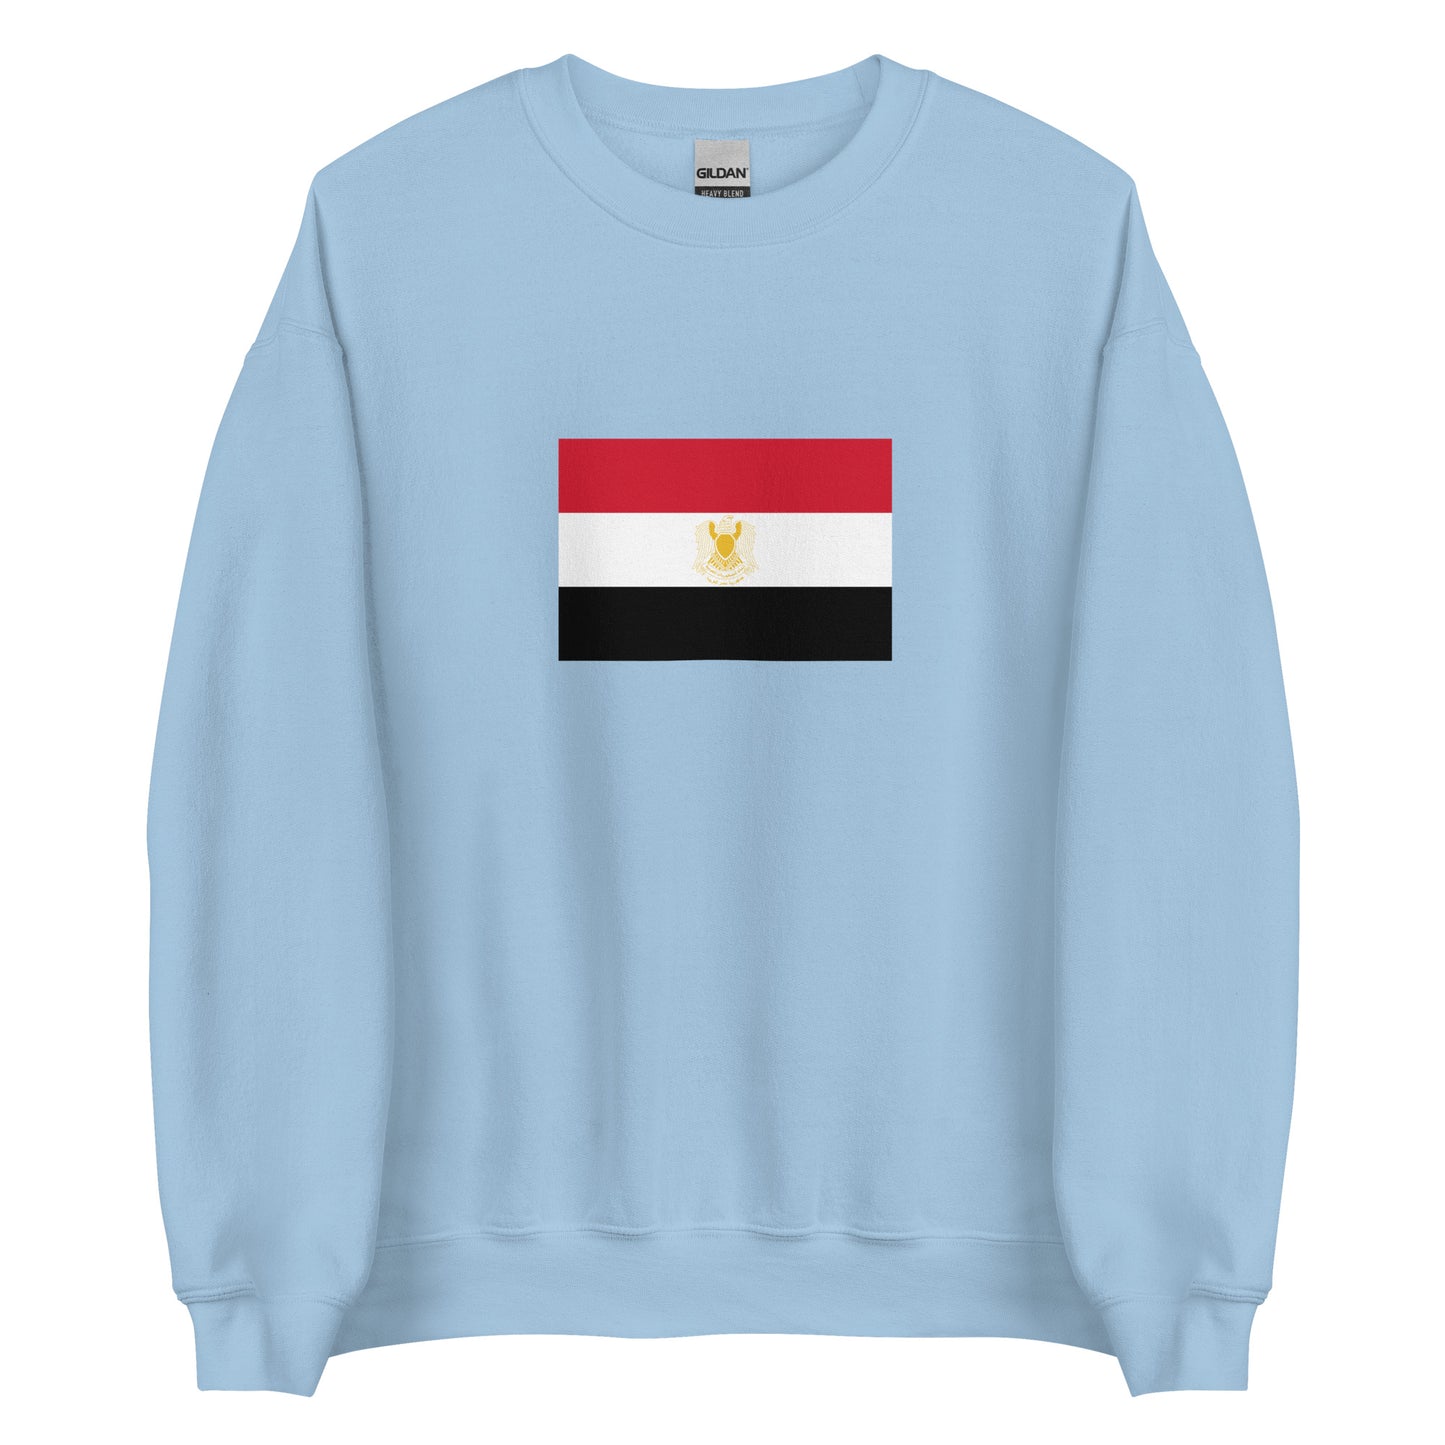 Egypt - Federation of Arab Republics (1972-1977) | Egypt Flag Interactive History Sweatshirt